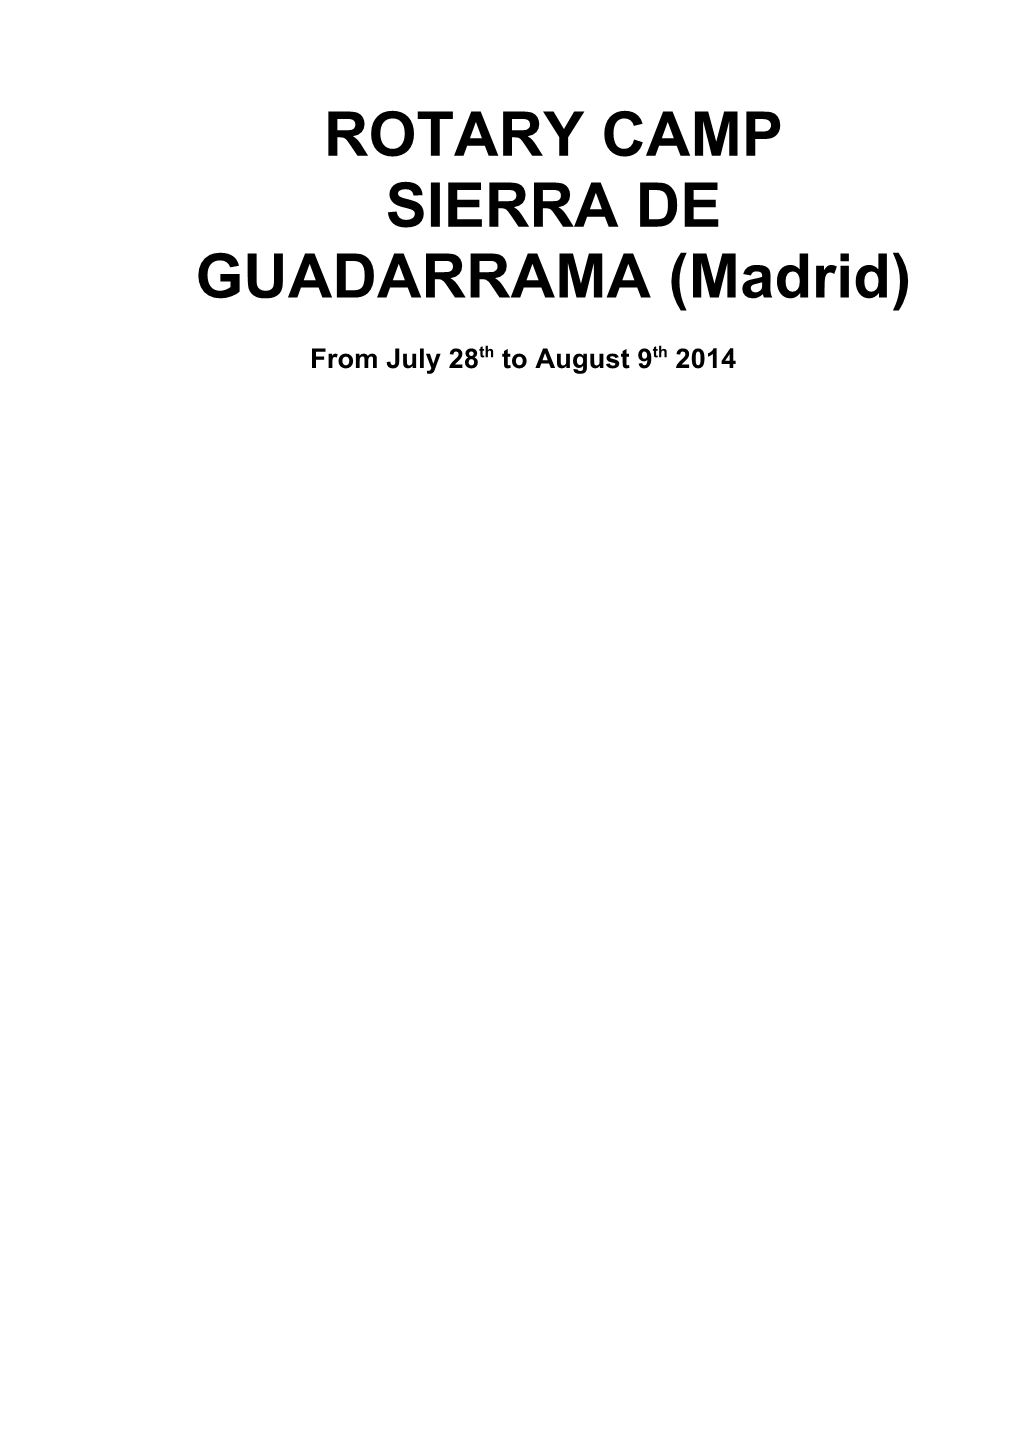 GUADARRAMA (Madrid)